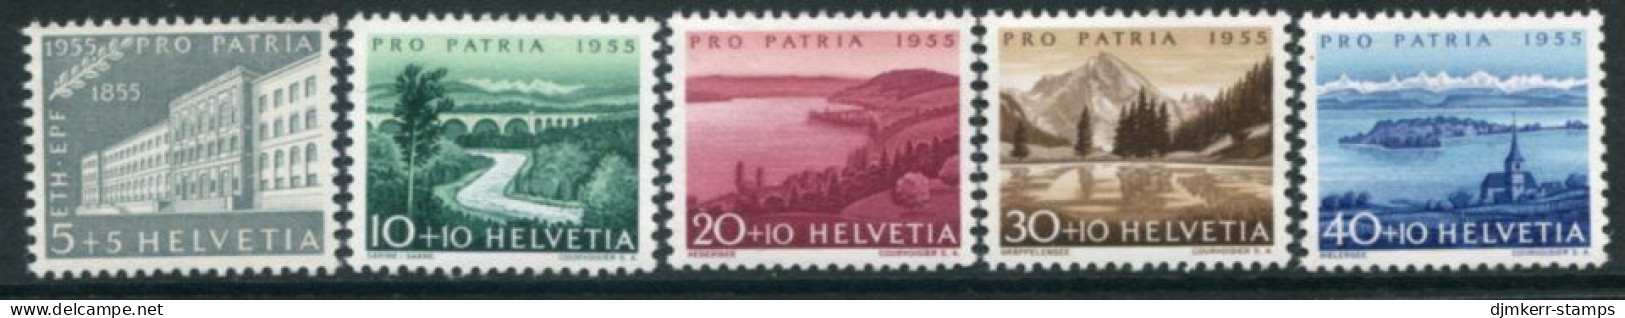 SWITZERLAND 1955 Pro Patria LHM / *. Michel 613-17 - Unused Stamps